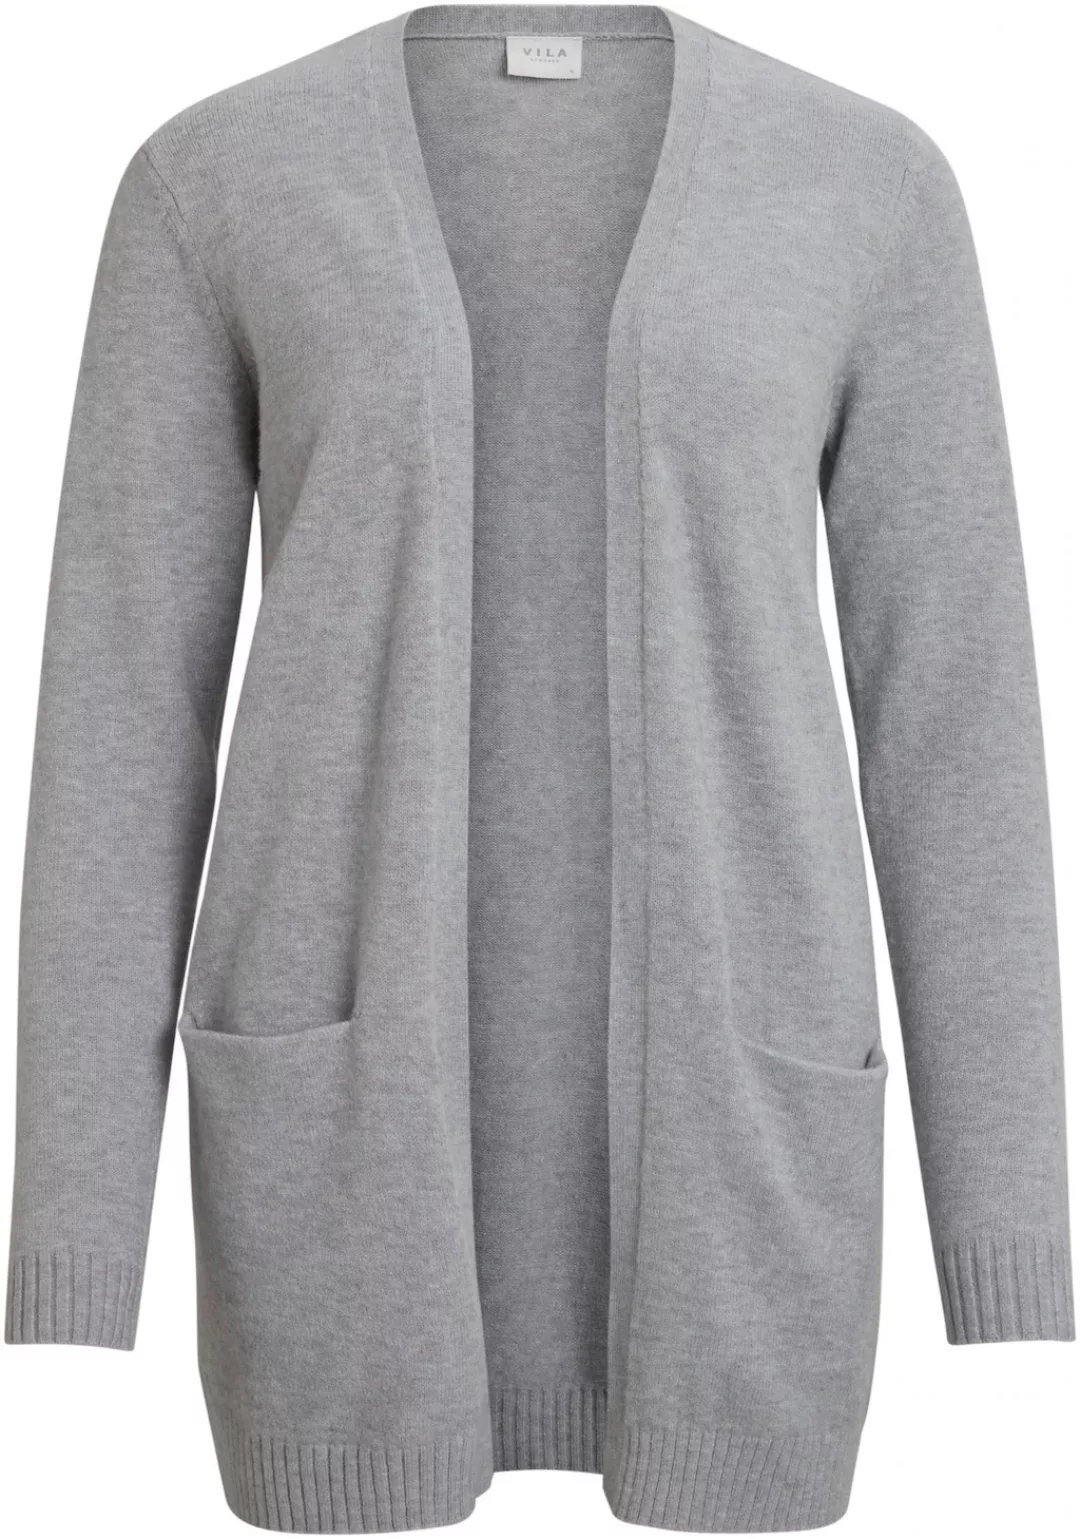 Vila Ril Open Langarm-cardigan XS Light Grey Melange günstig online kaufen